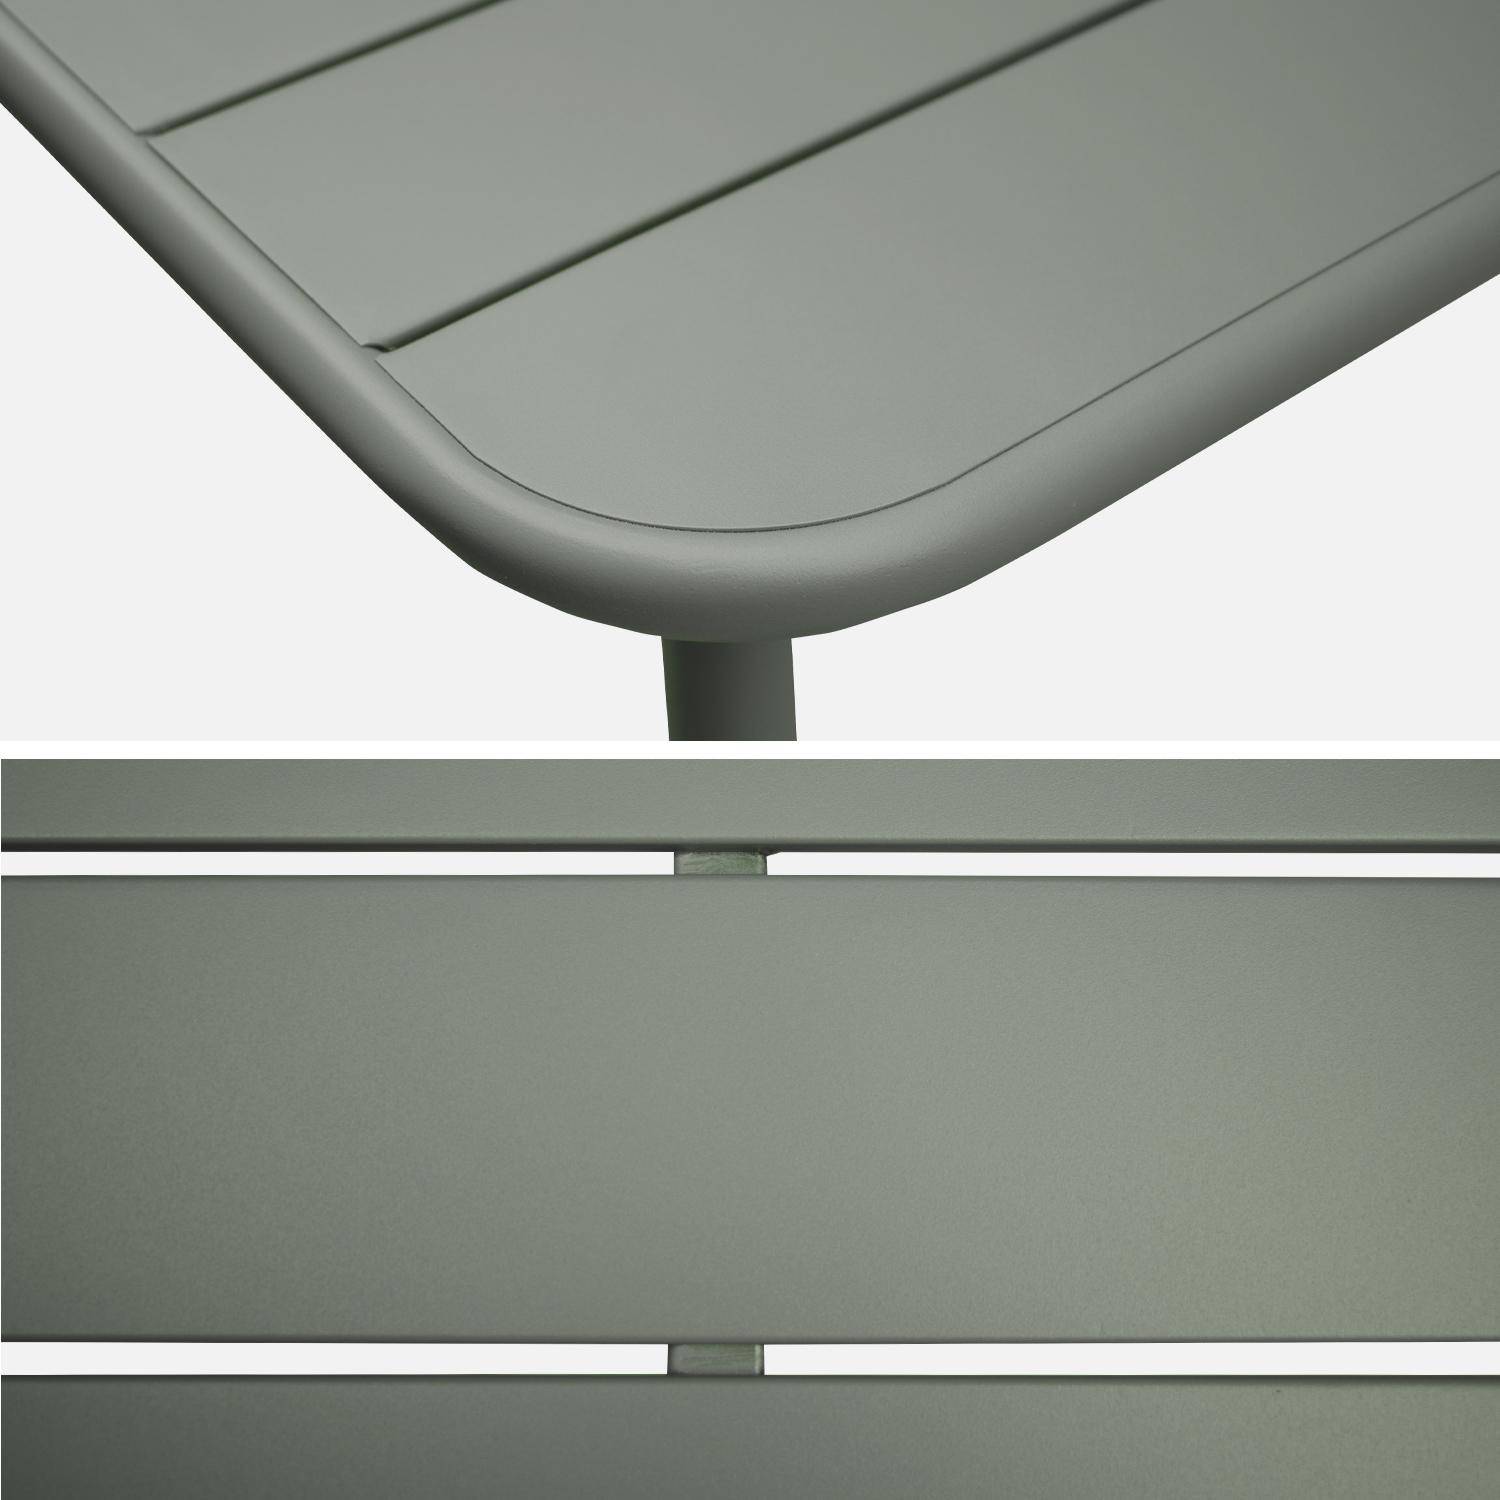 4-seater rectangular steel garden table, 120x70cm - Amelia - Khaki Green Photo6